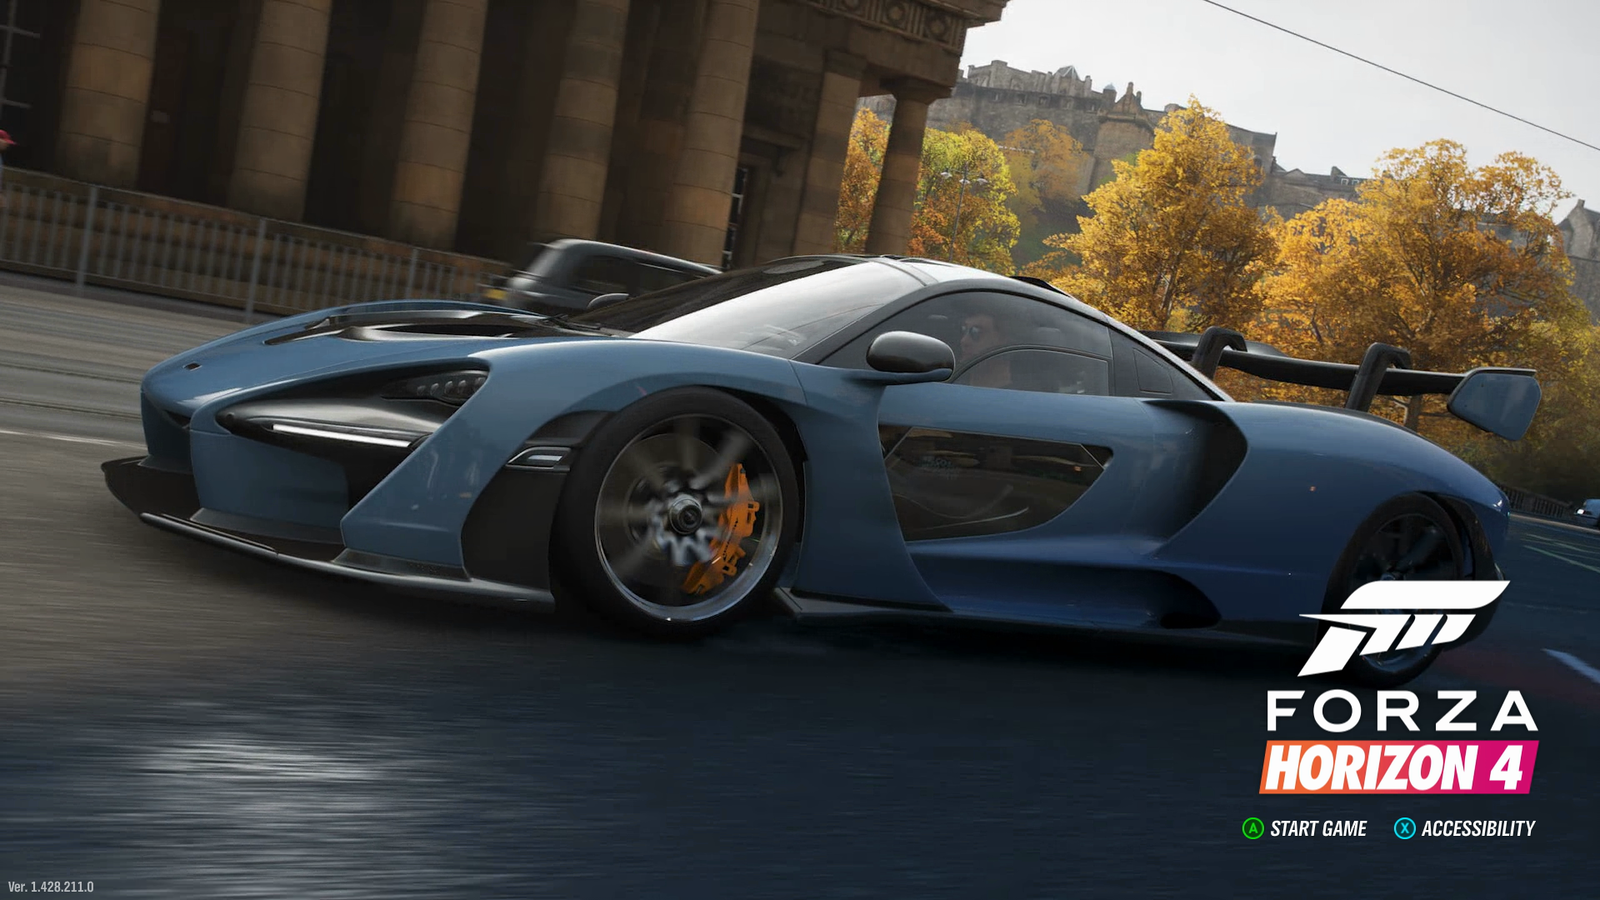 Forza Horizon 4 のランディング画面のスクリーンショット。 「Press A to start game」と「Press X for Accessibility」という 2 つのナビゲーション プロンプトがあります。